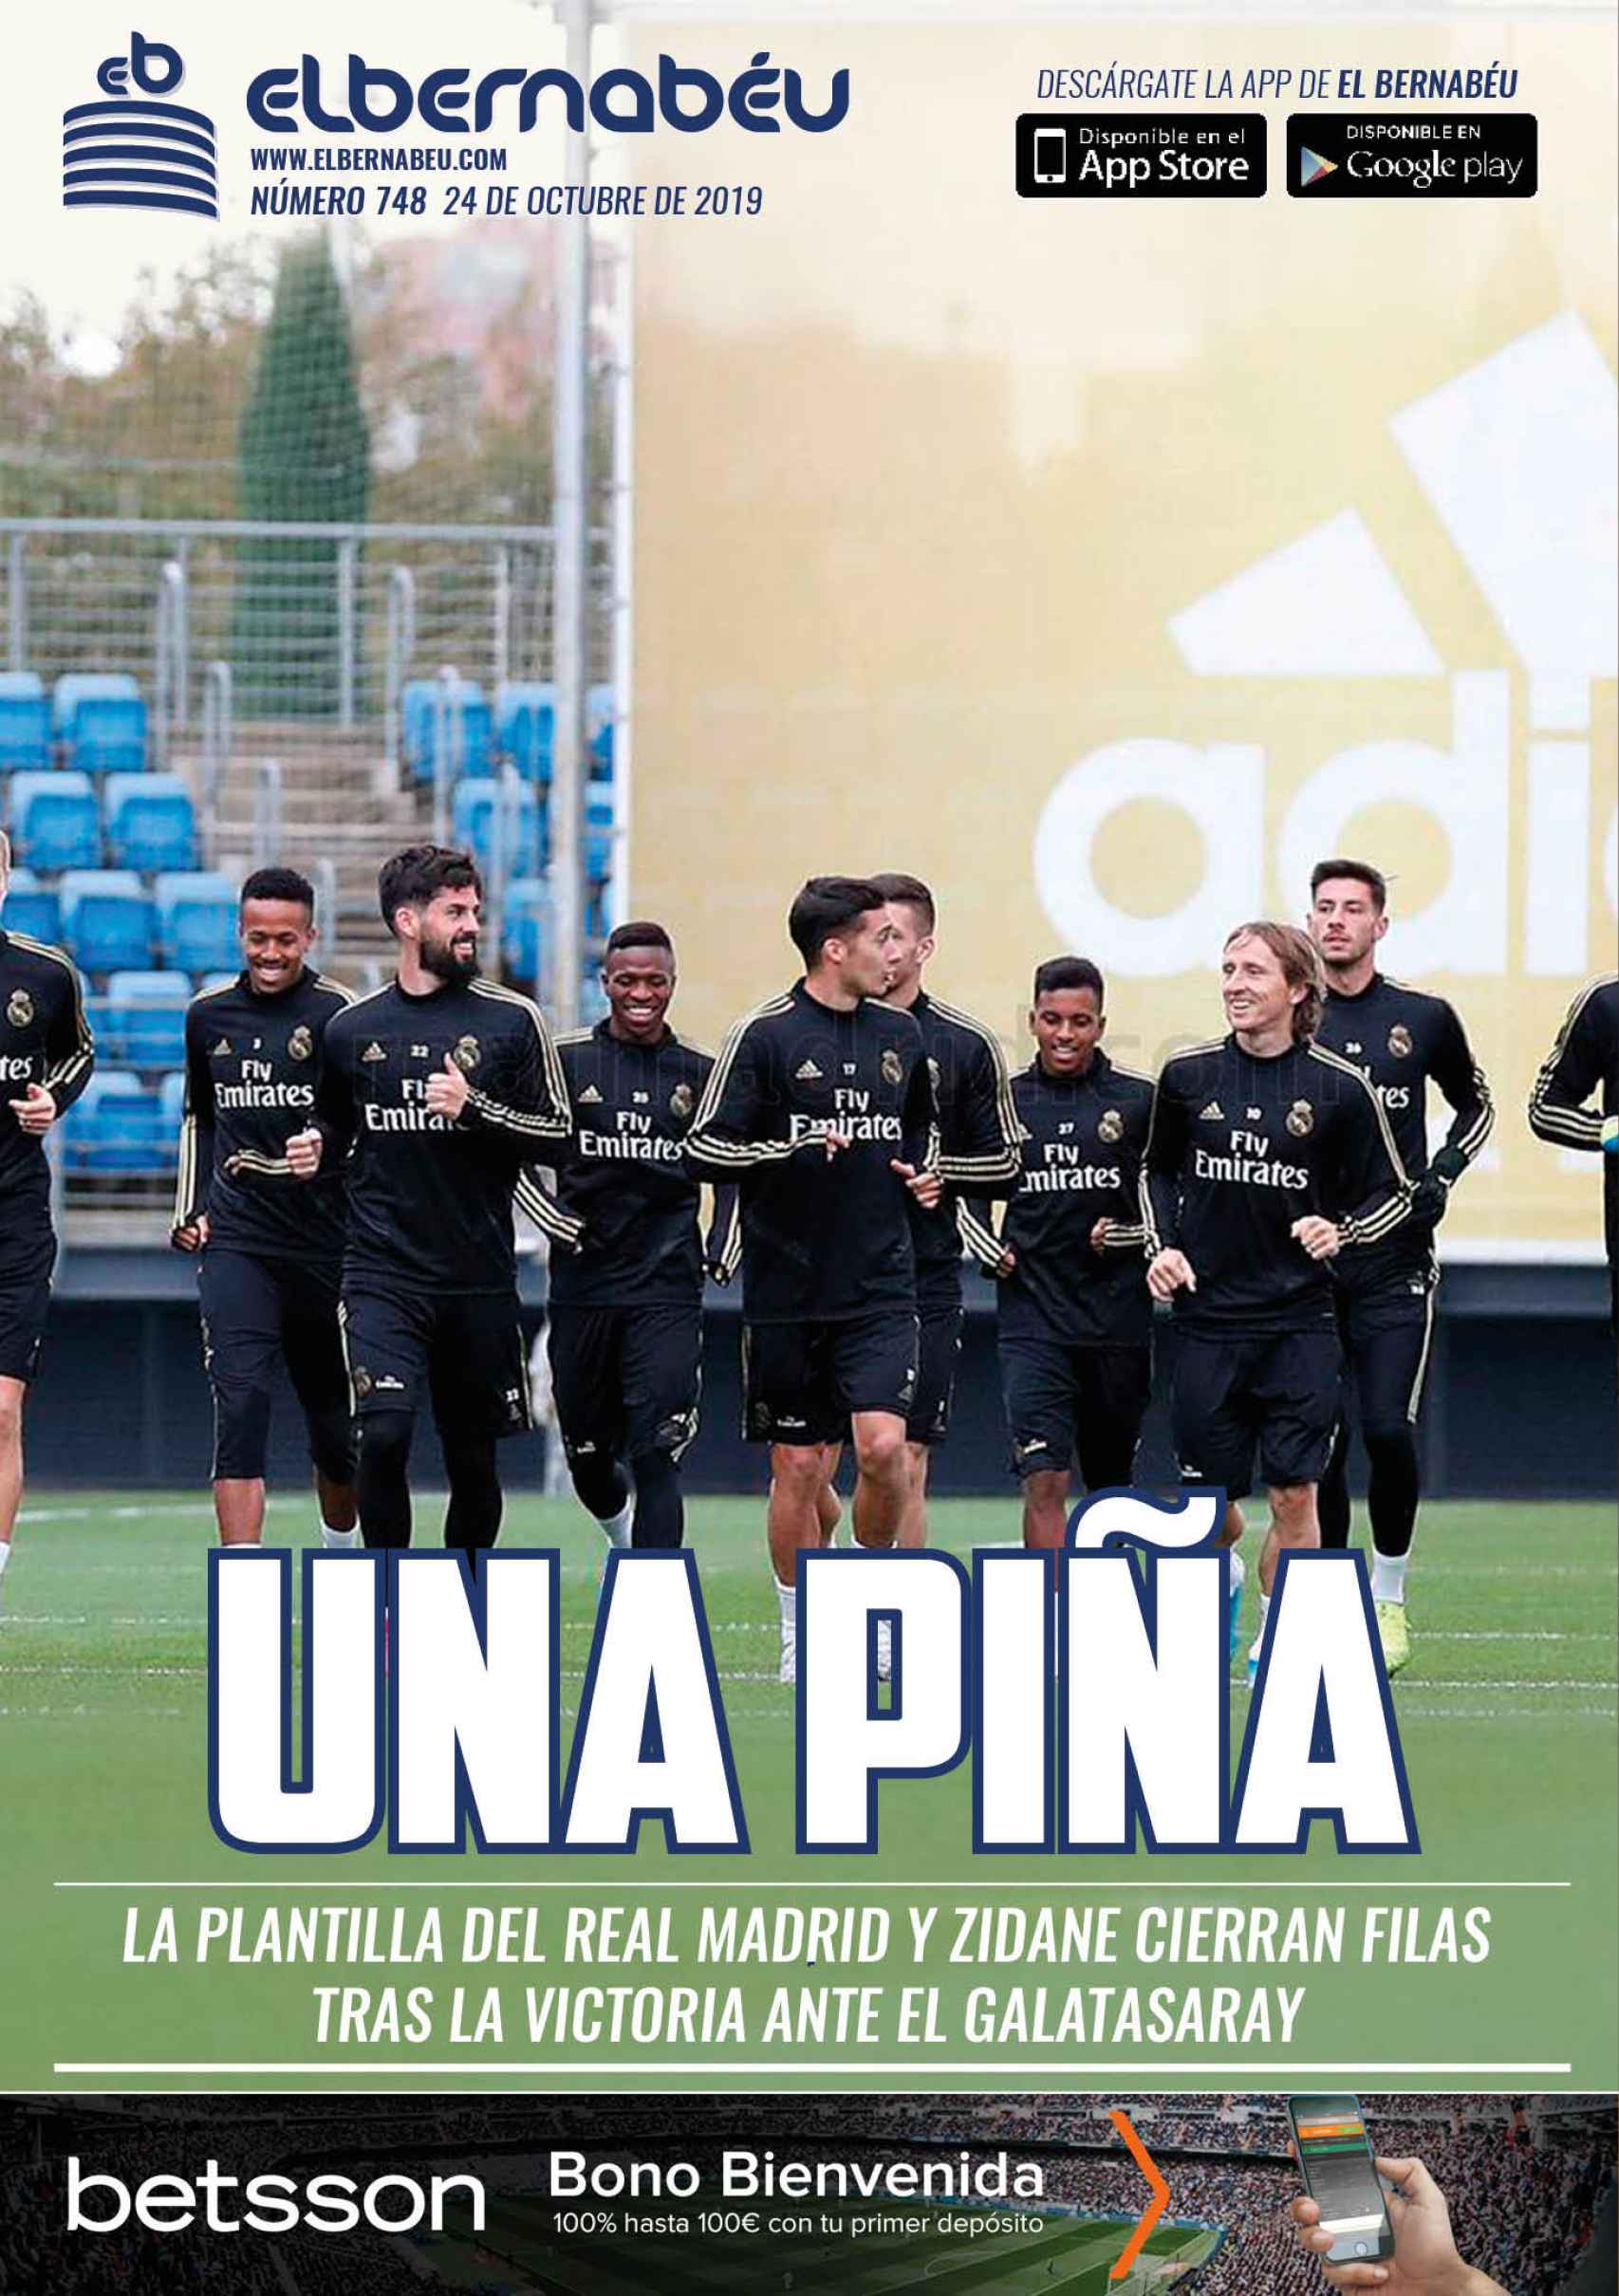 La portada de El Bernabéu (24/10/2019)